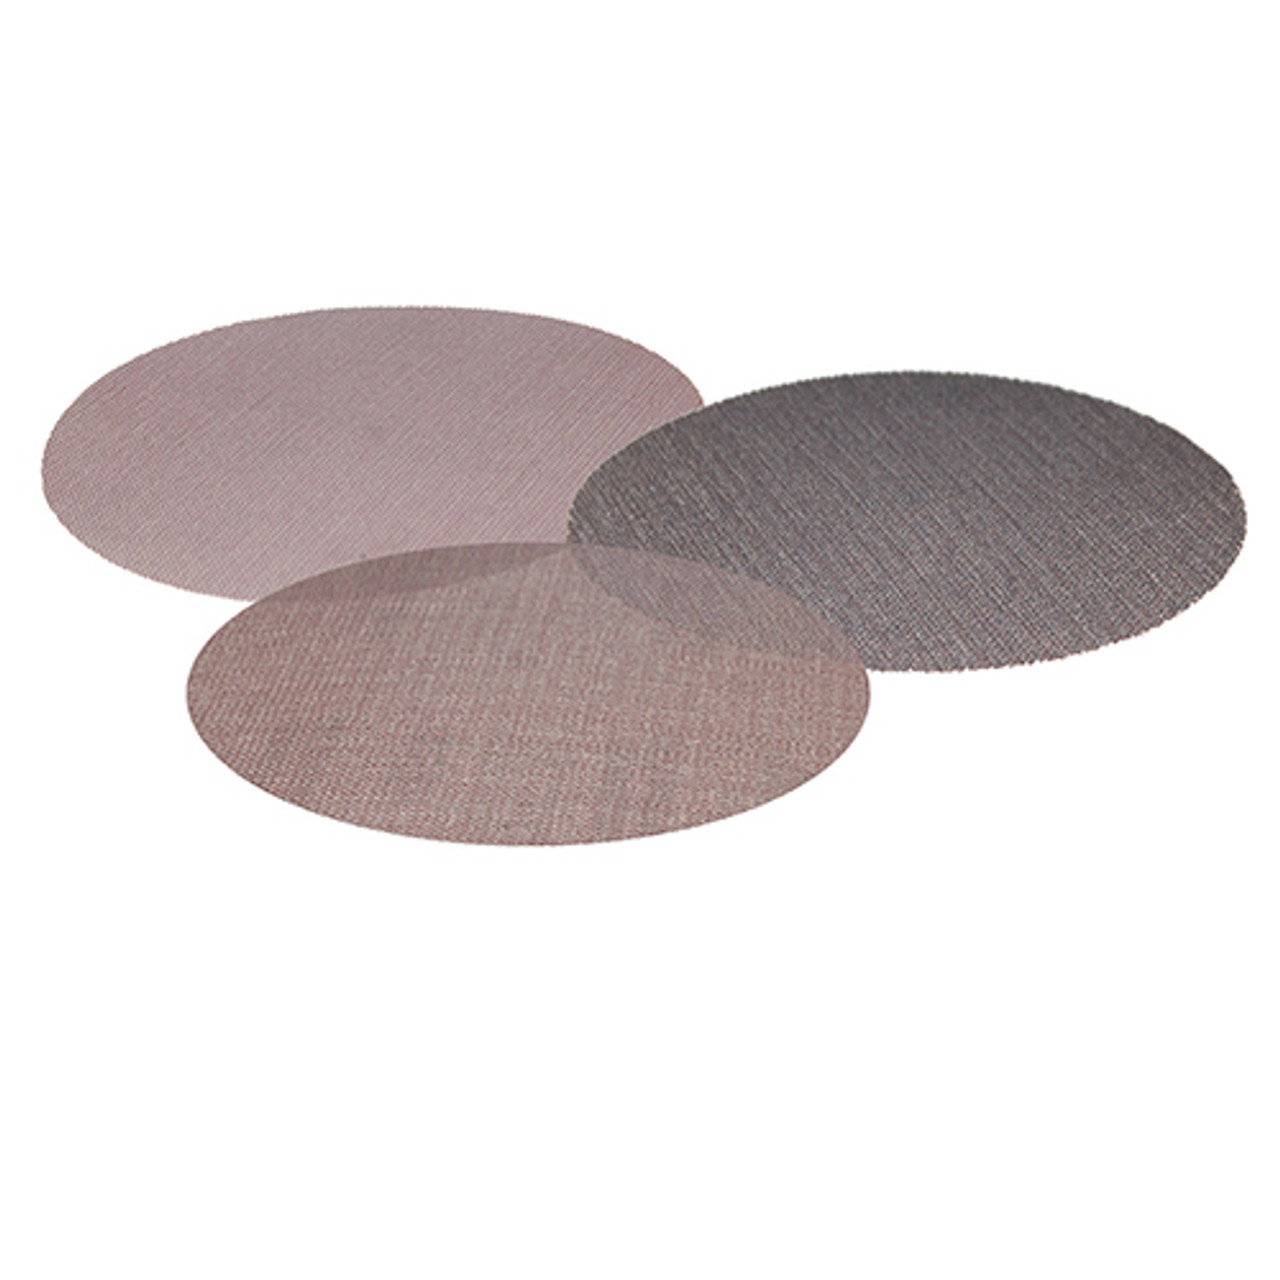 Klingspor Abrasives Klingnet, 800 Grit, Aluminum Oxide, Hook & Loop, 5" Discs, 25pk